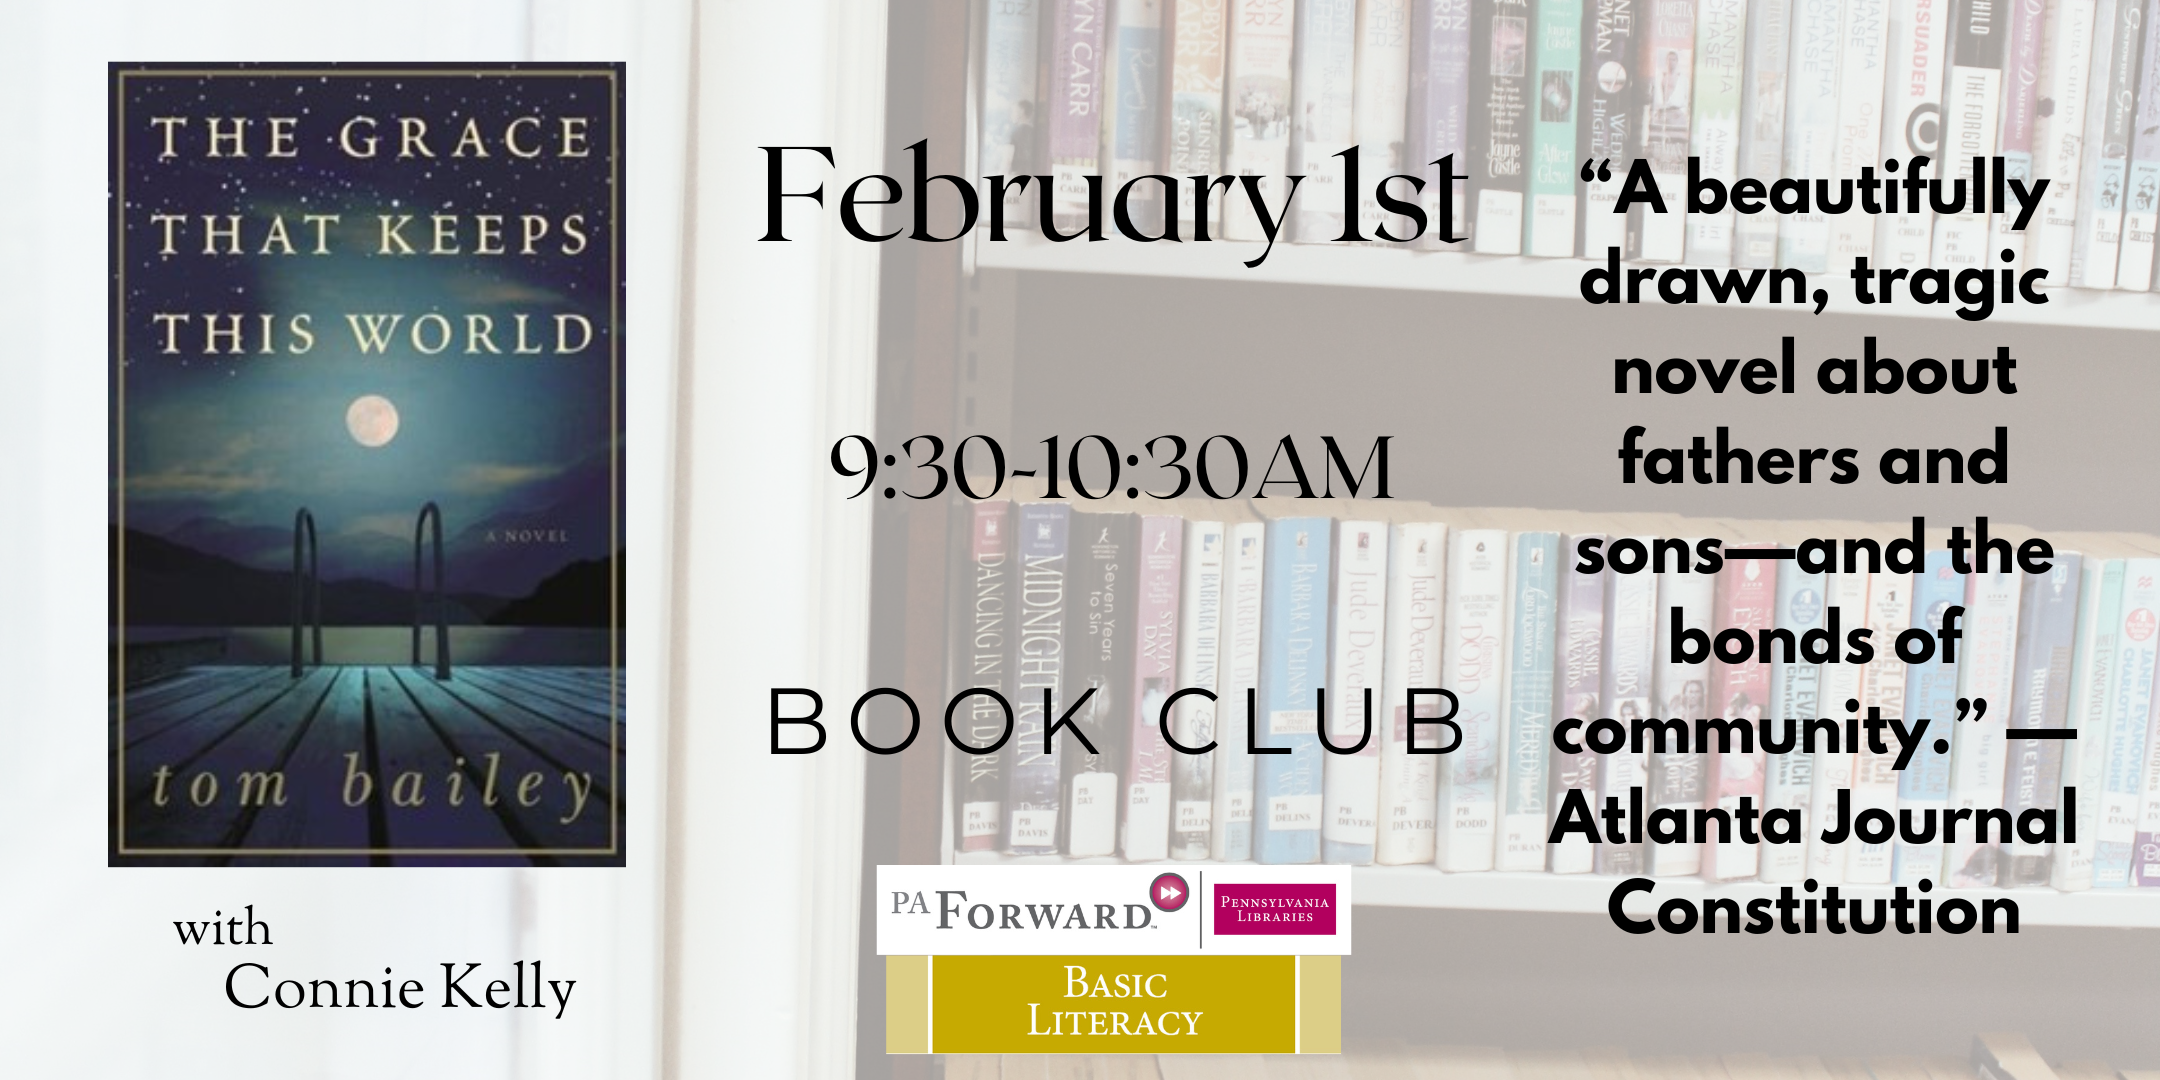 Book Club February 1st at 9:30am